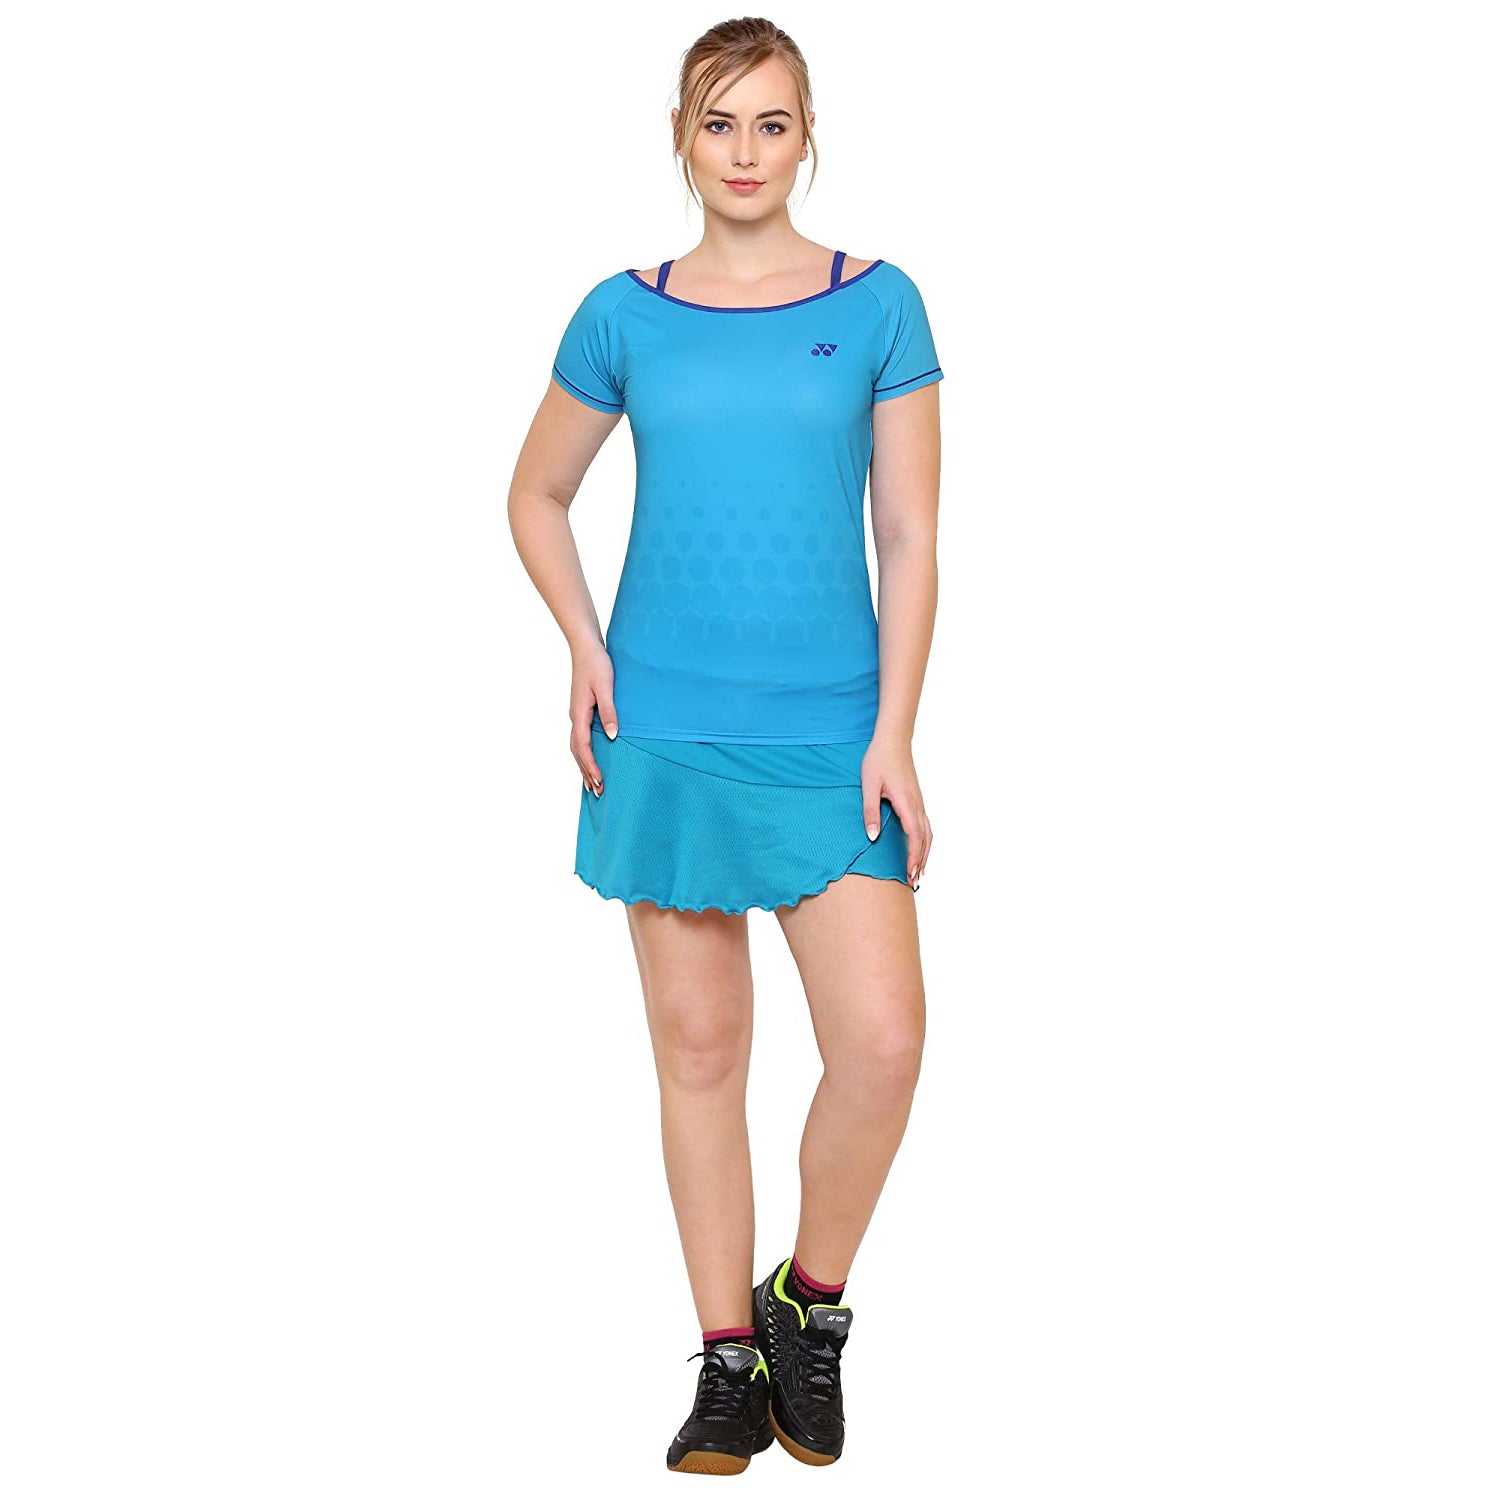 Yonex 20282 Round Neck T Shirt for Women, Capri Breeze - Best Price online Prokicksports.com